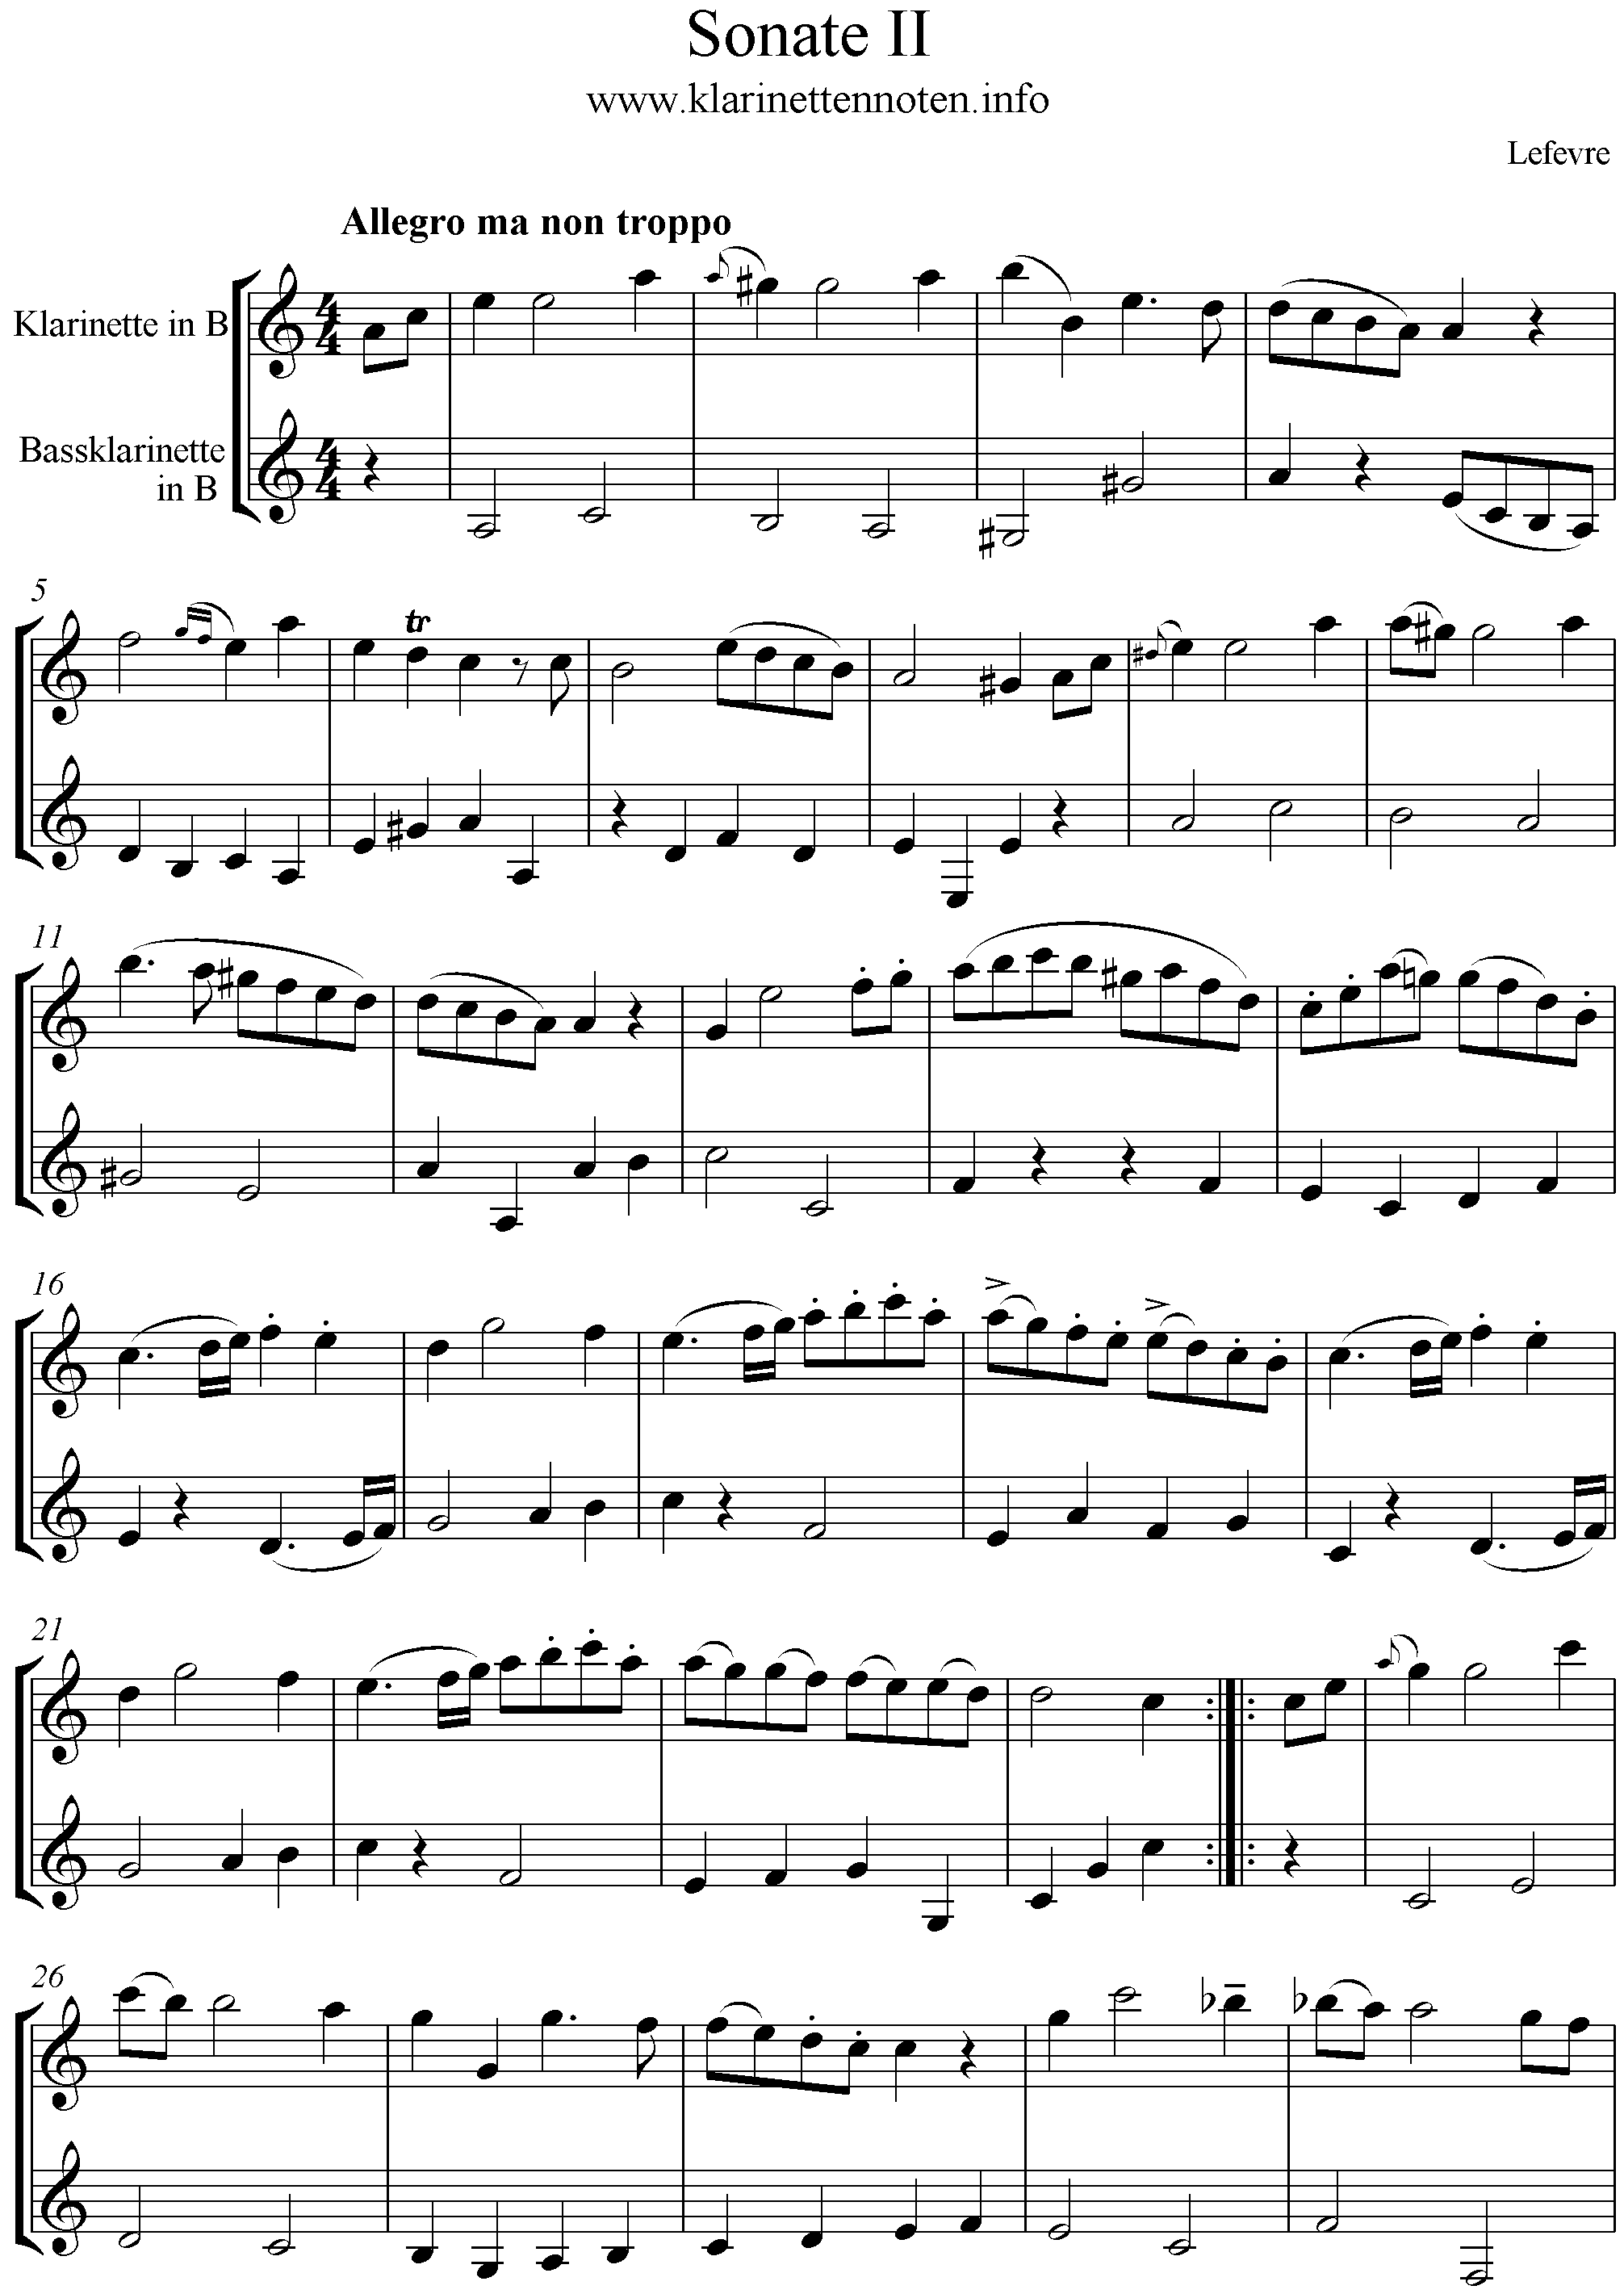 Lefevre Sonata II - Clarinet Duo